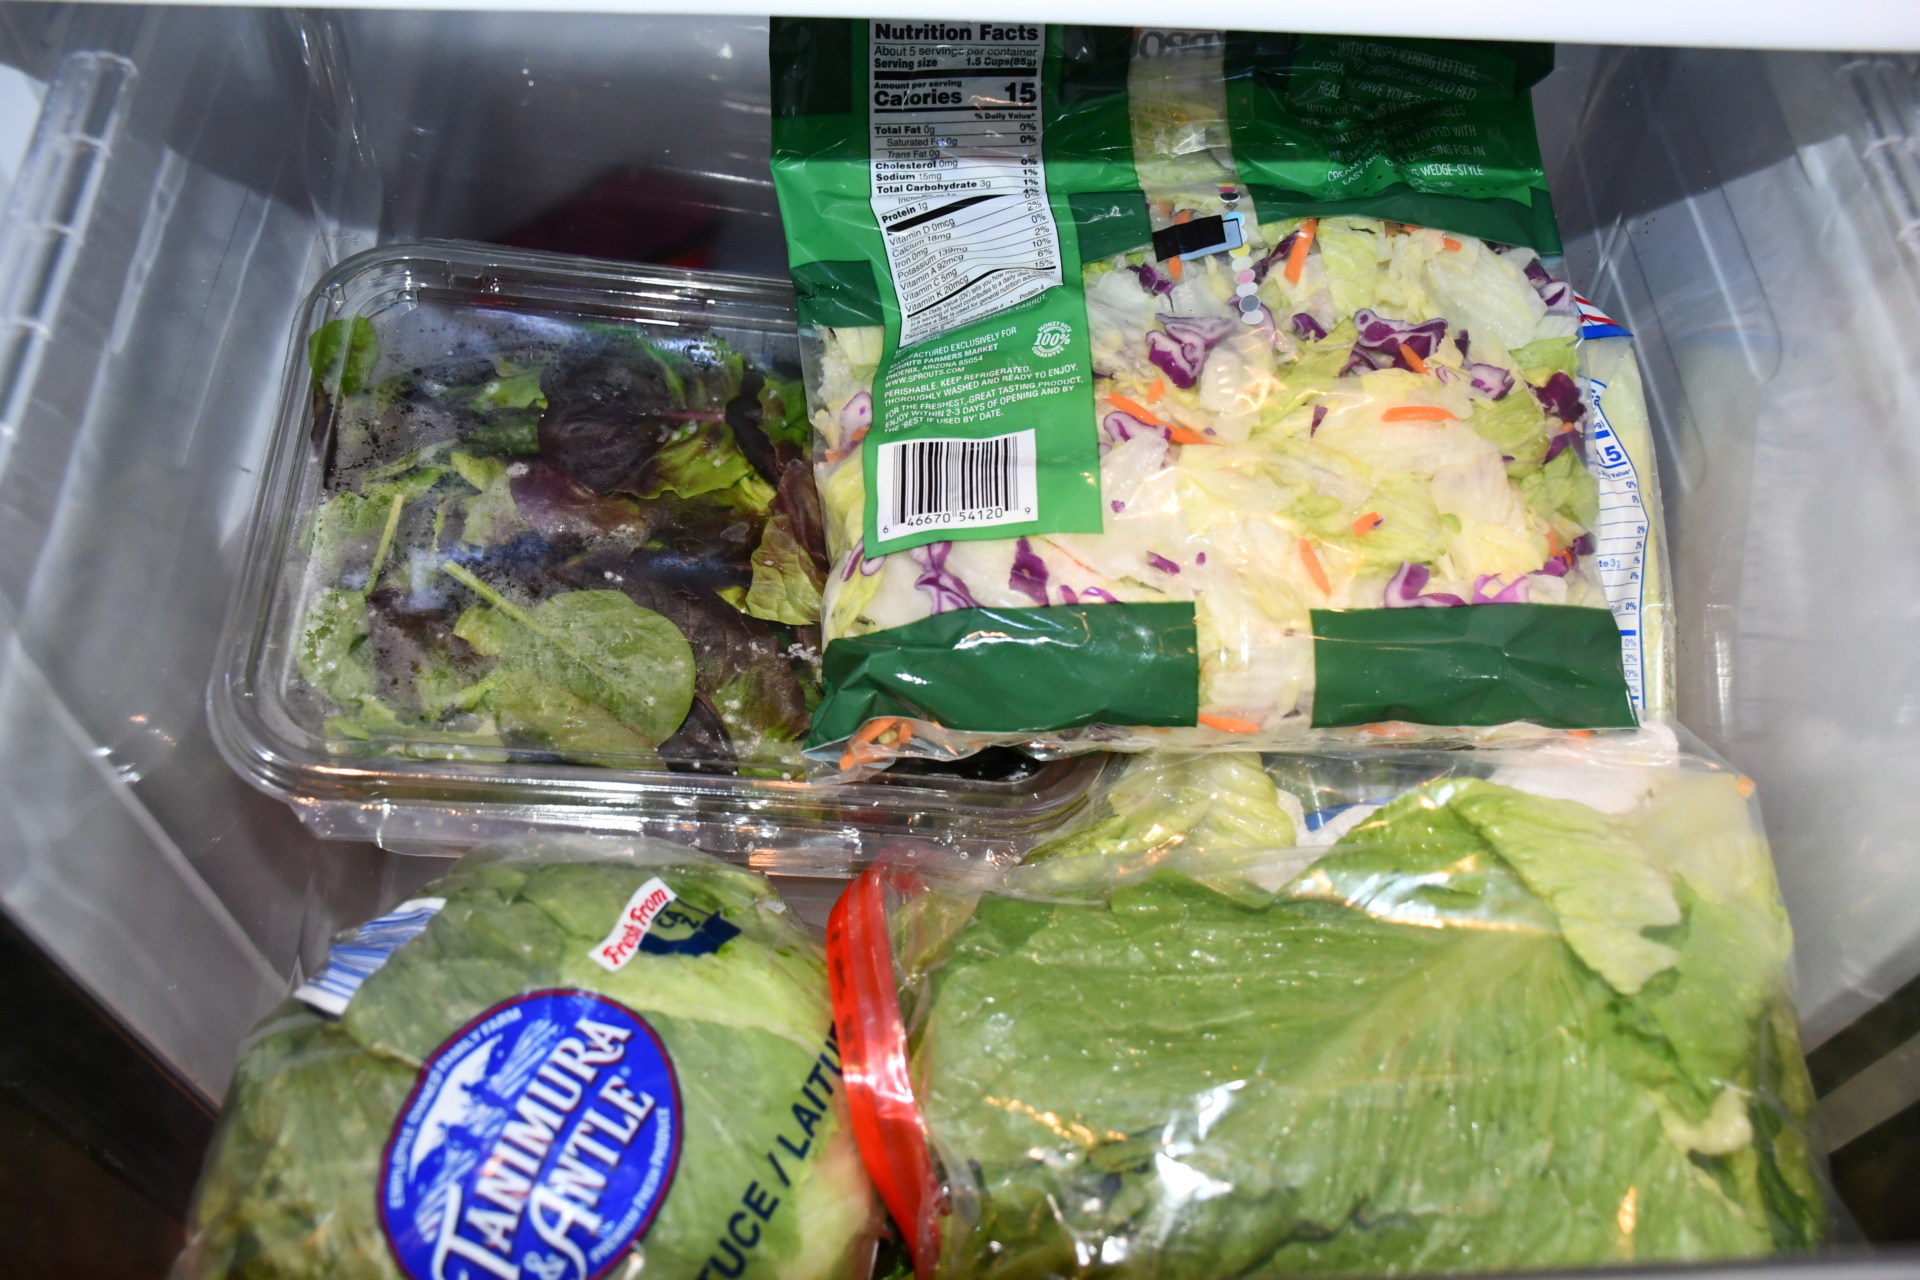 Keeping Salad Greens Fresh